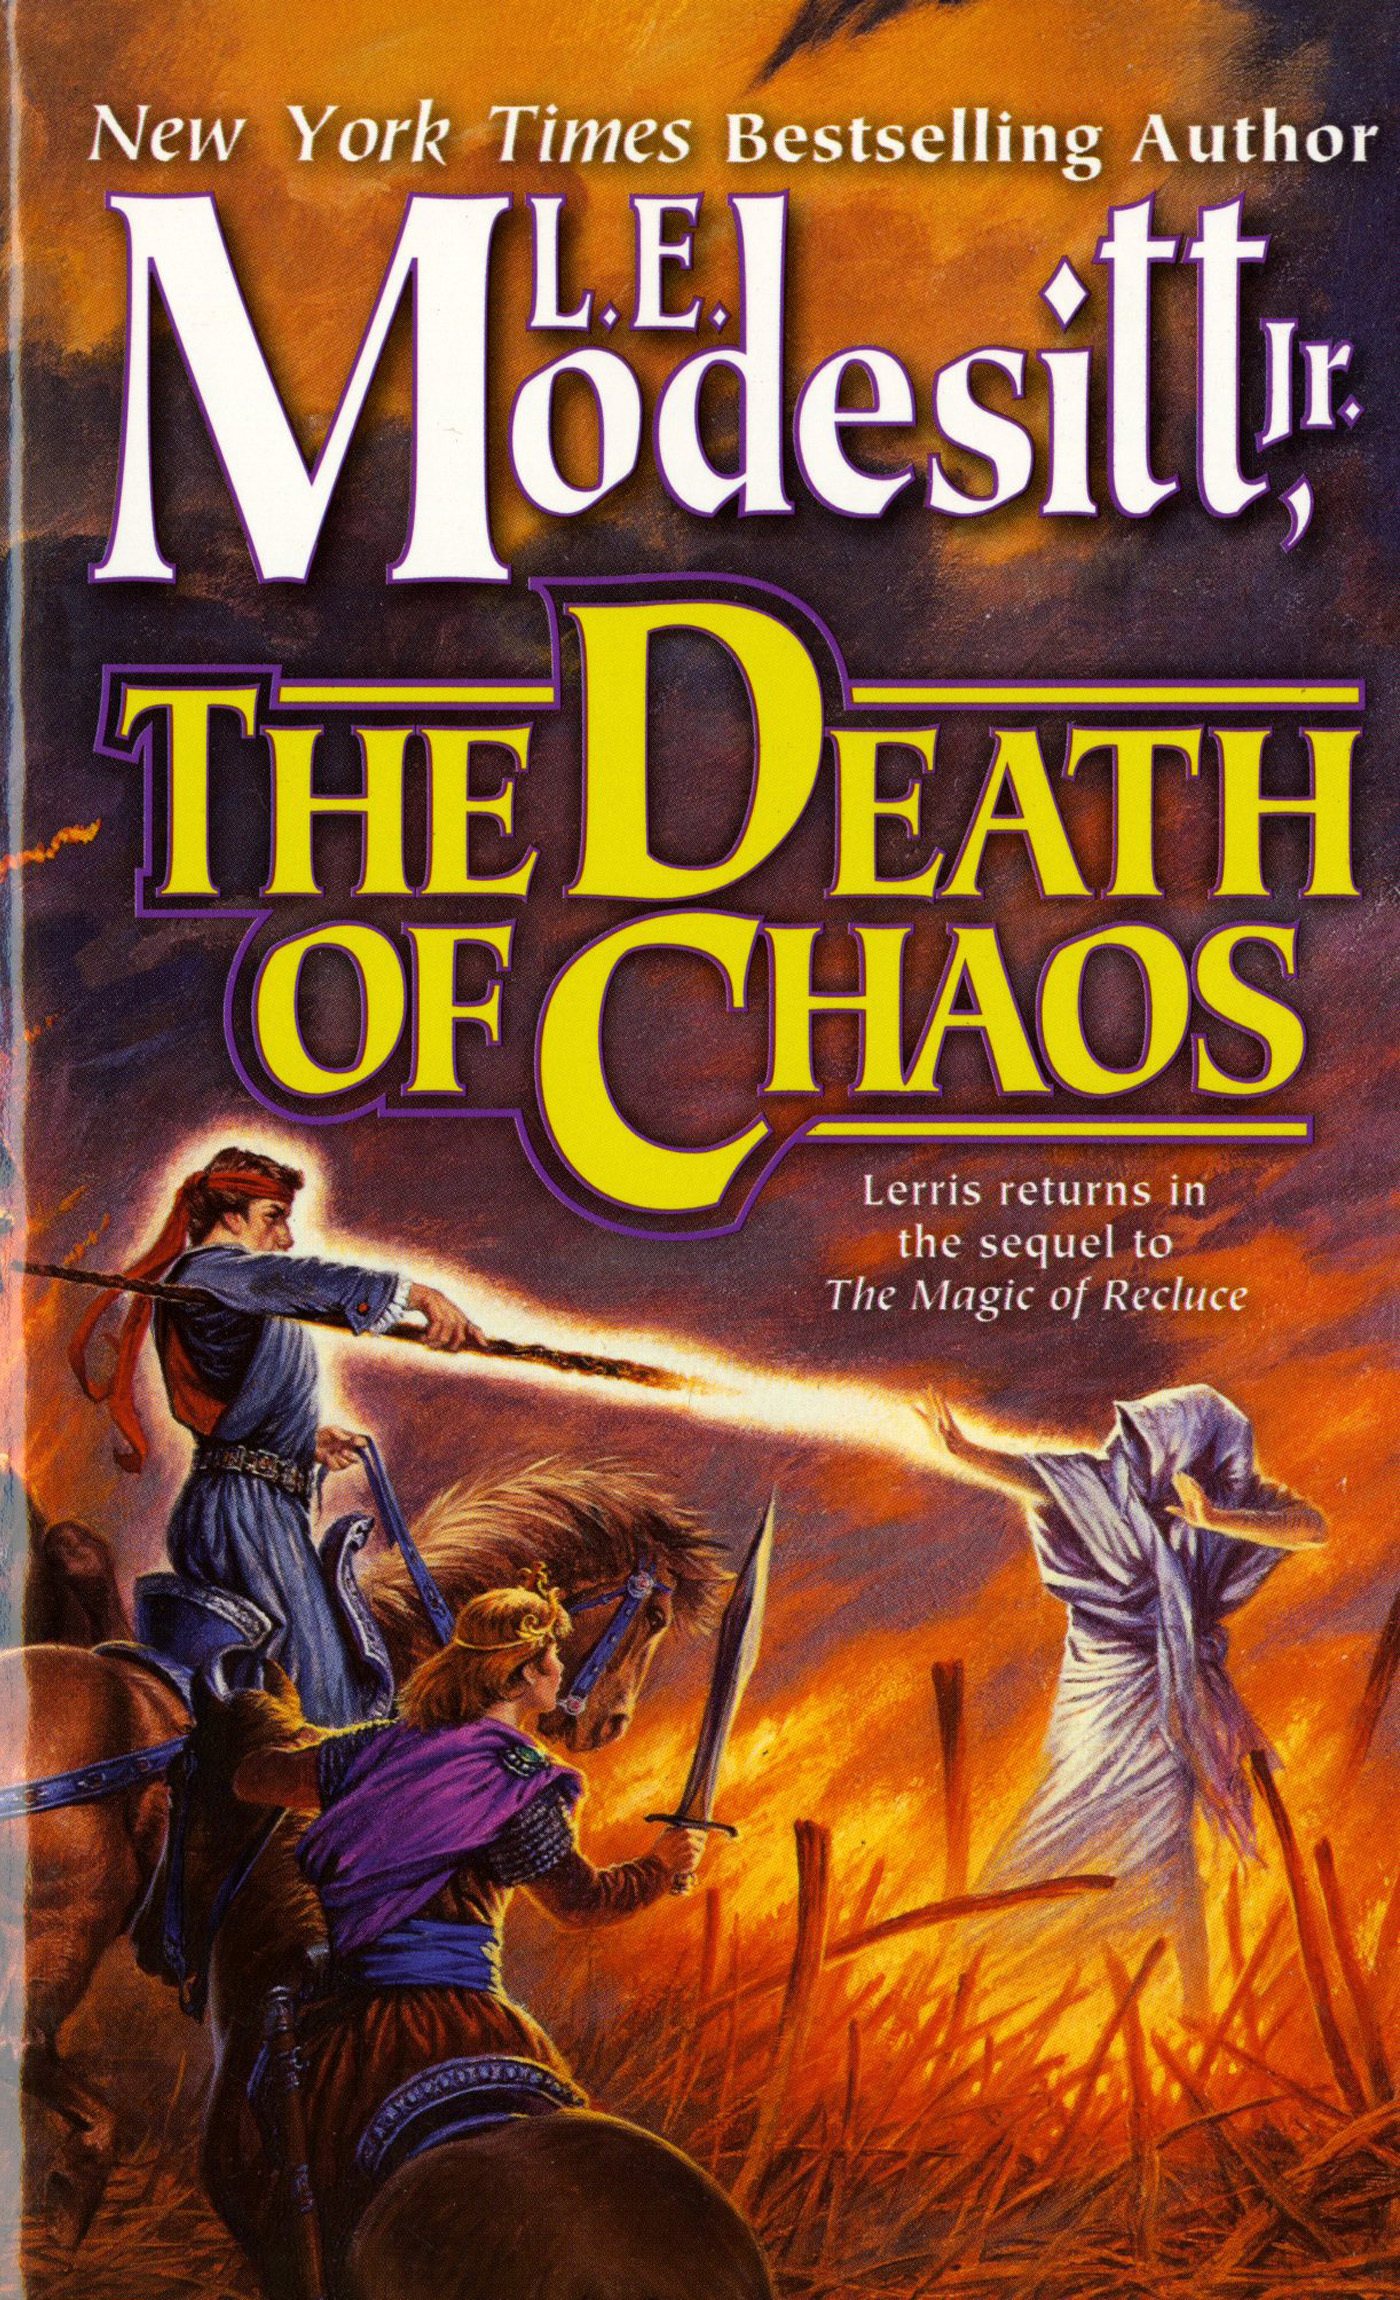 The Death of Chaos by L. E. Modesitt, Jr.